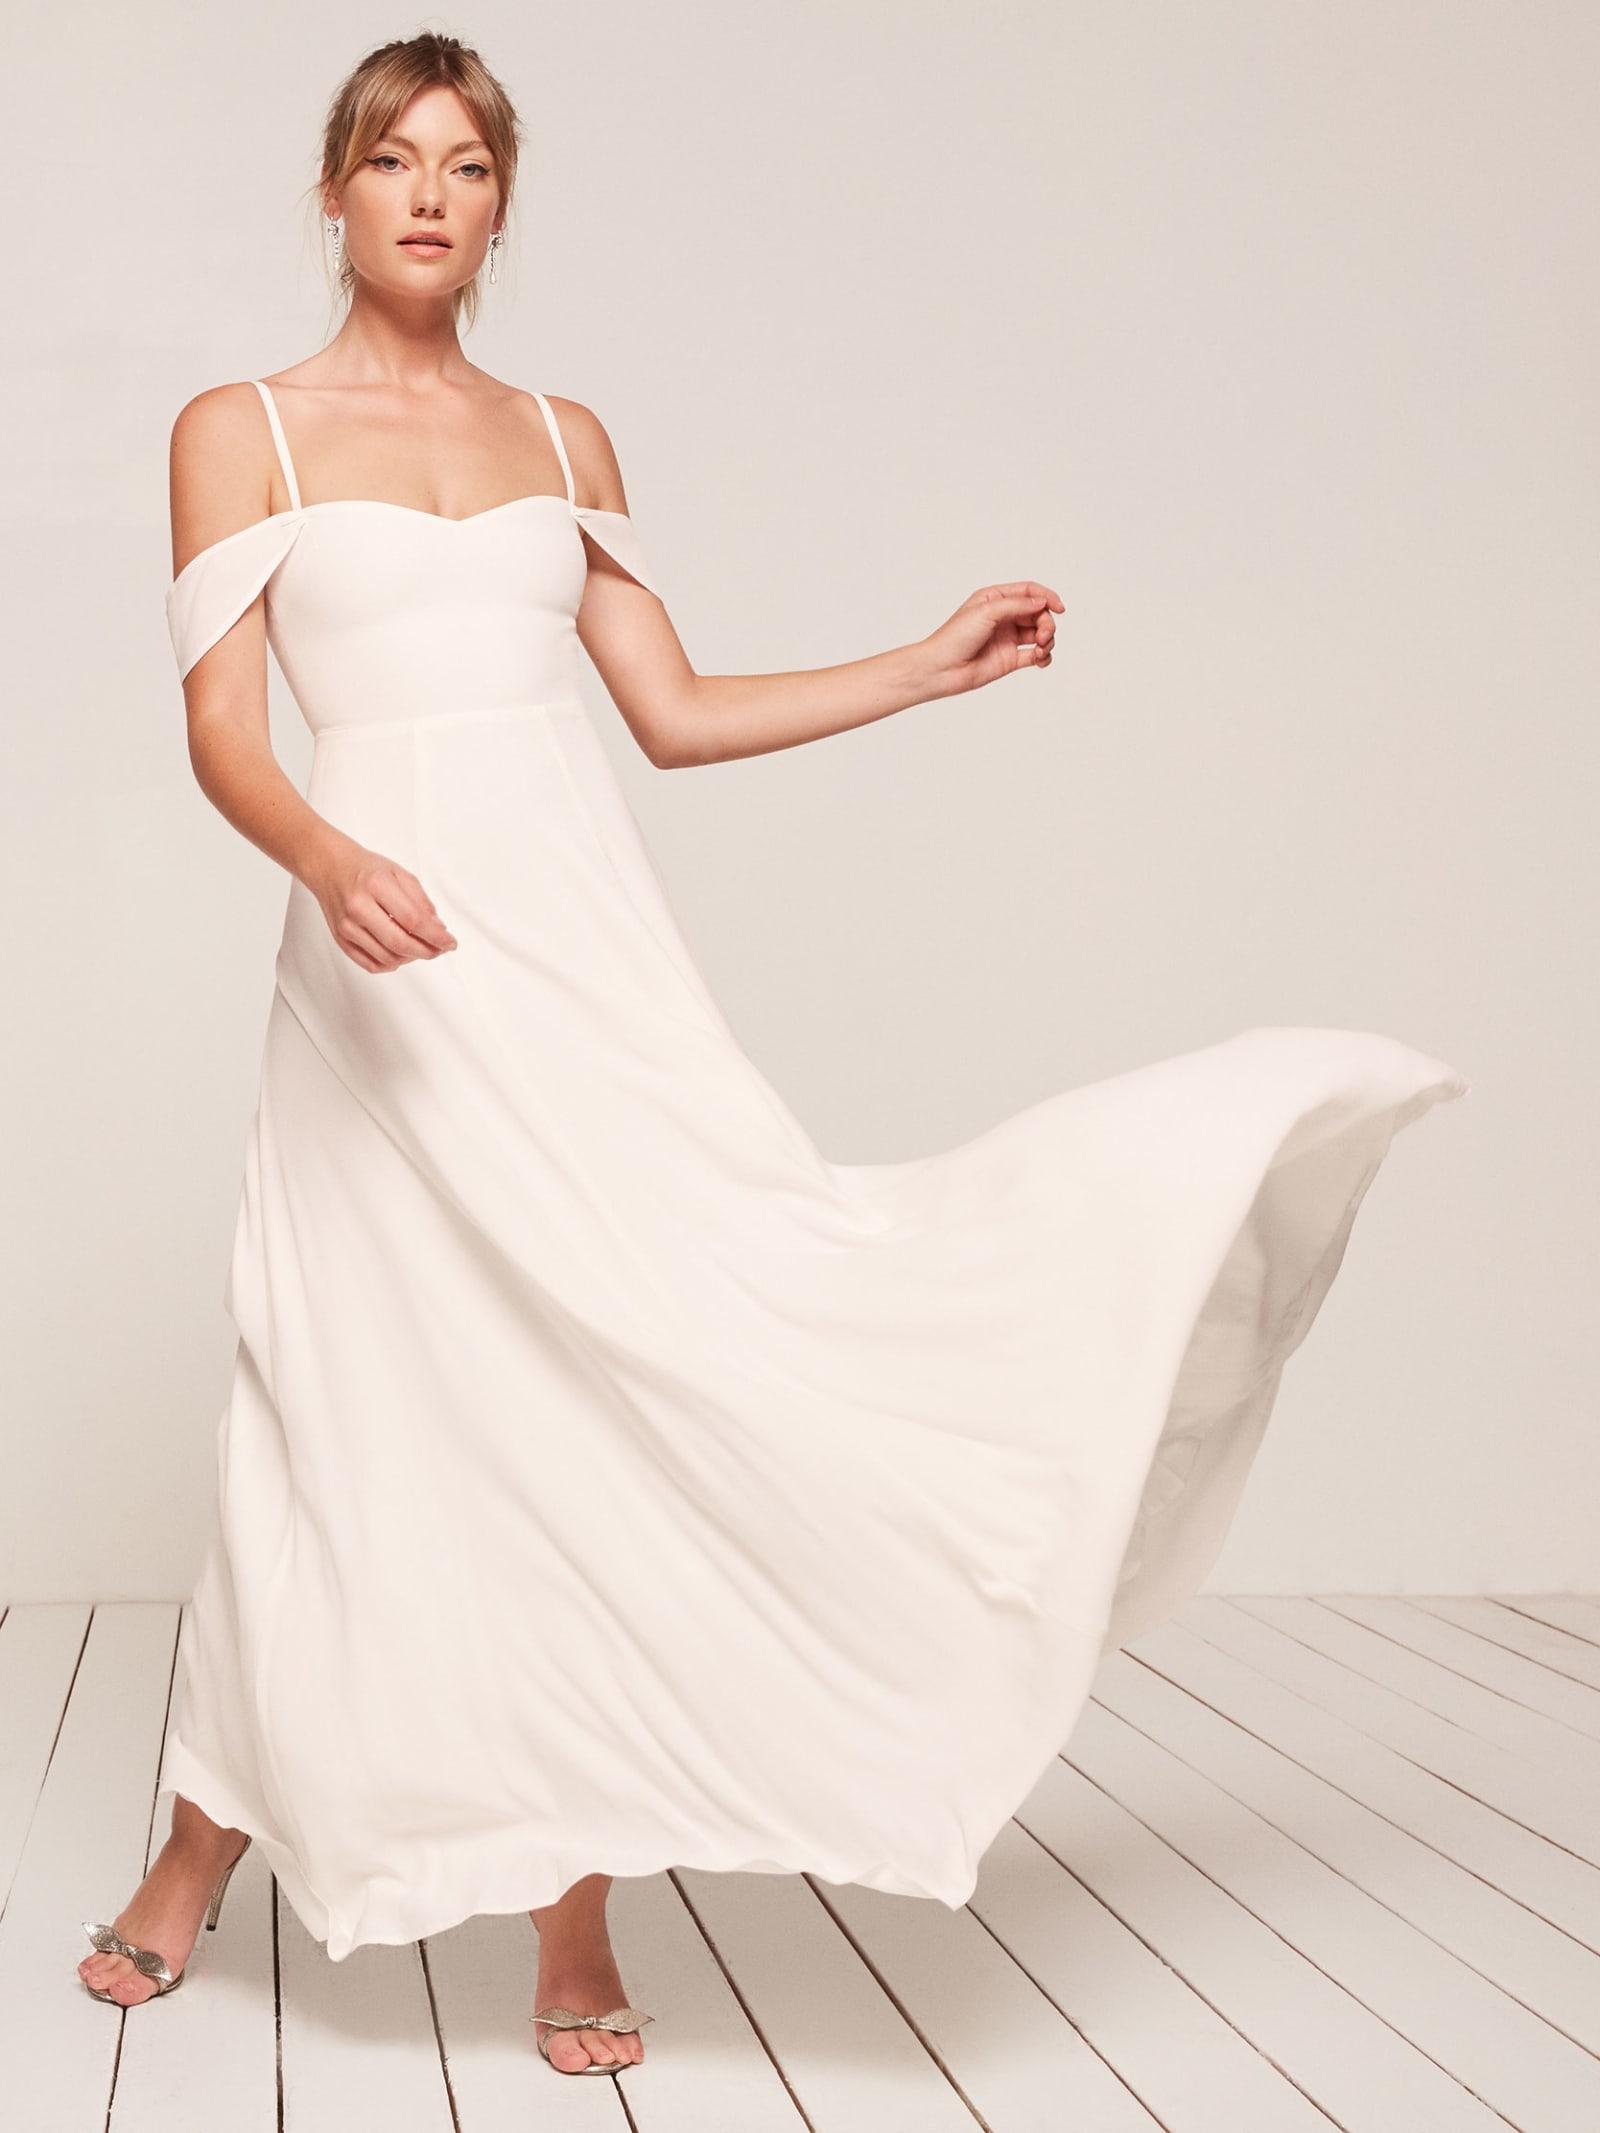 Reformation Poppy Dress in White